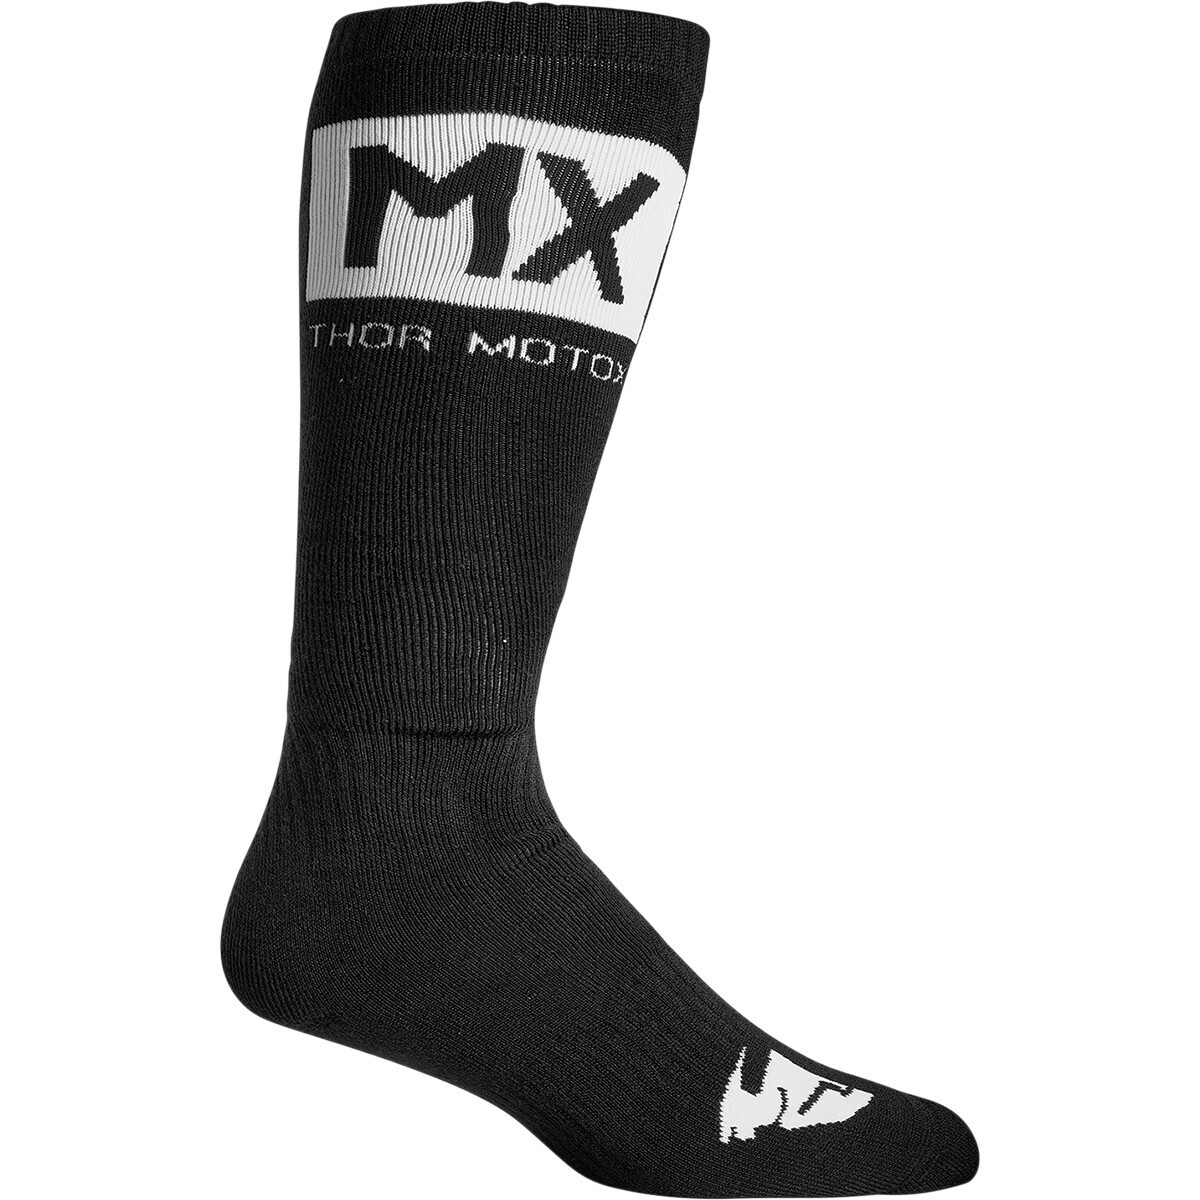 THOR
Youth MX Solid Socks - Black/White - Size 1-7 (EU32-39)